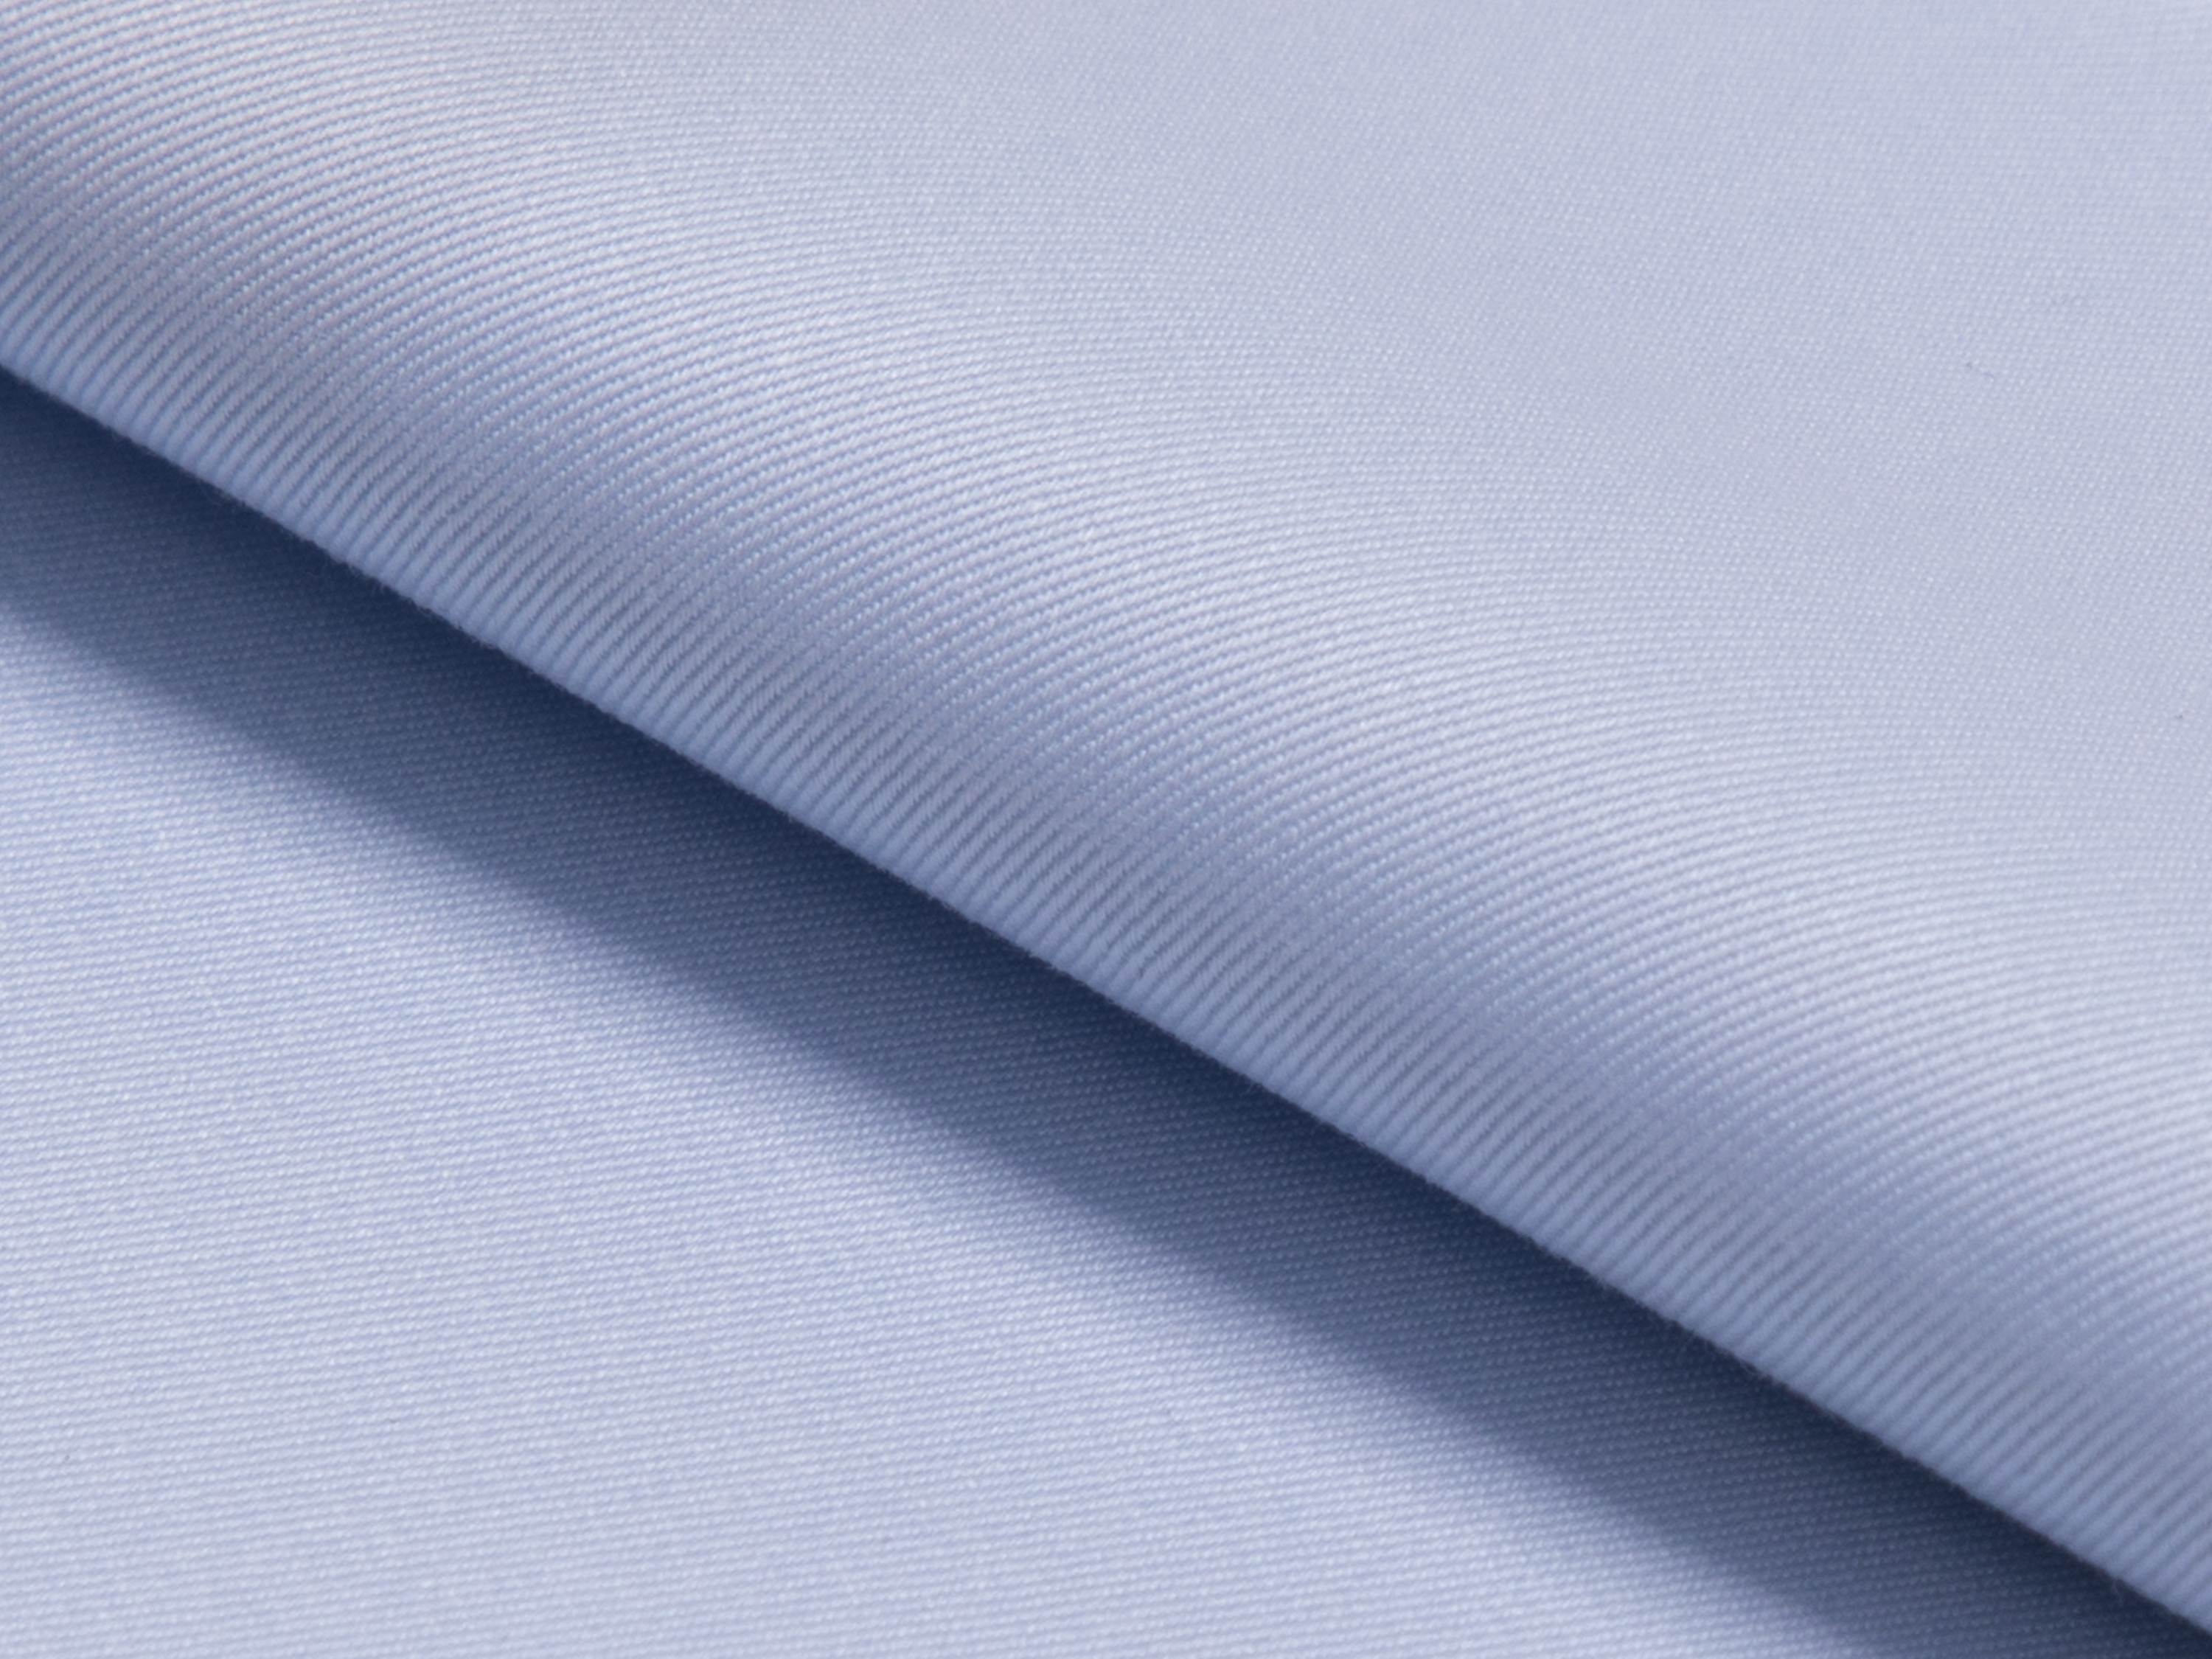 Buy tailor made shirts online - MAYFAIR - Twill Light Blue